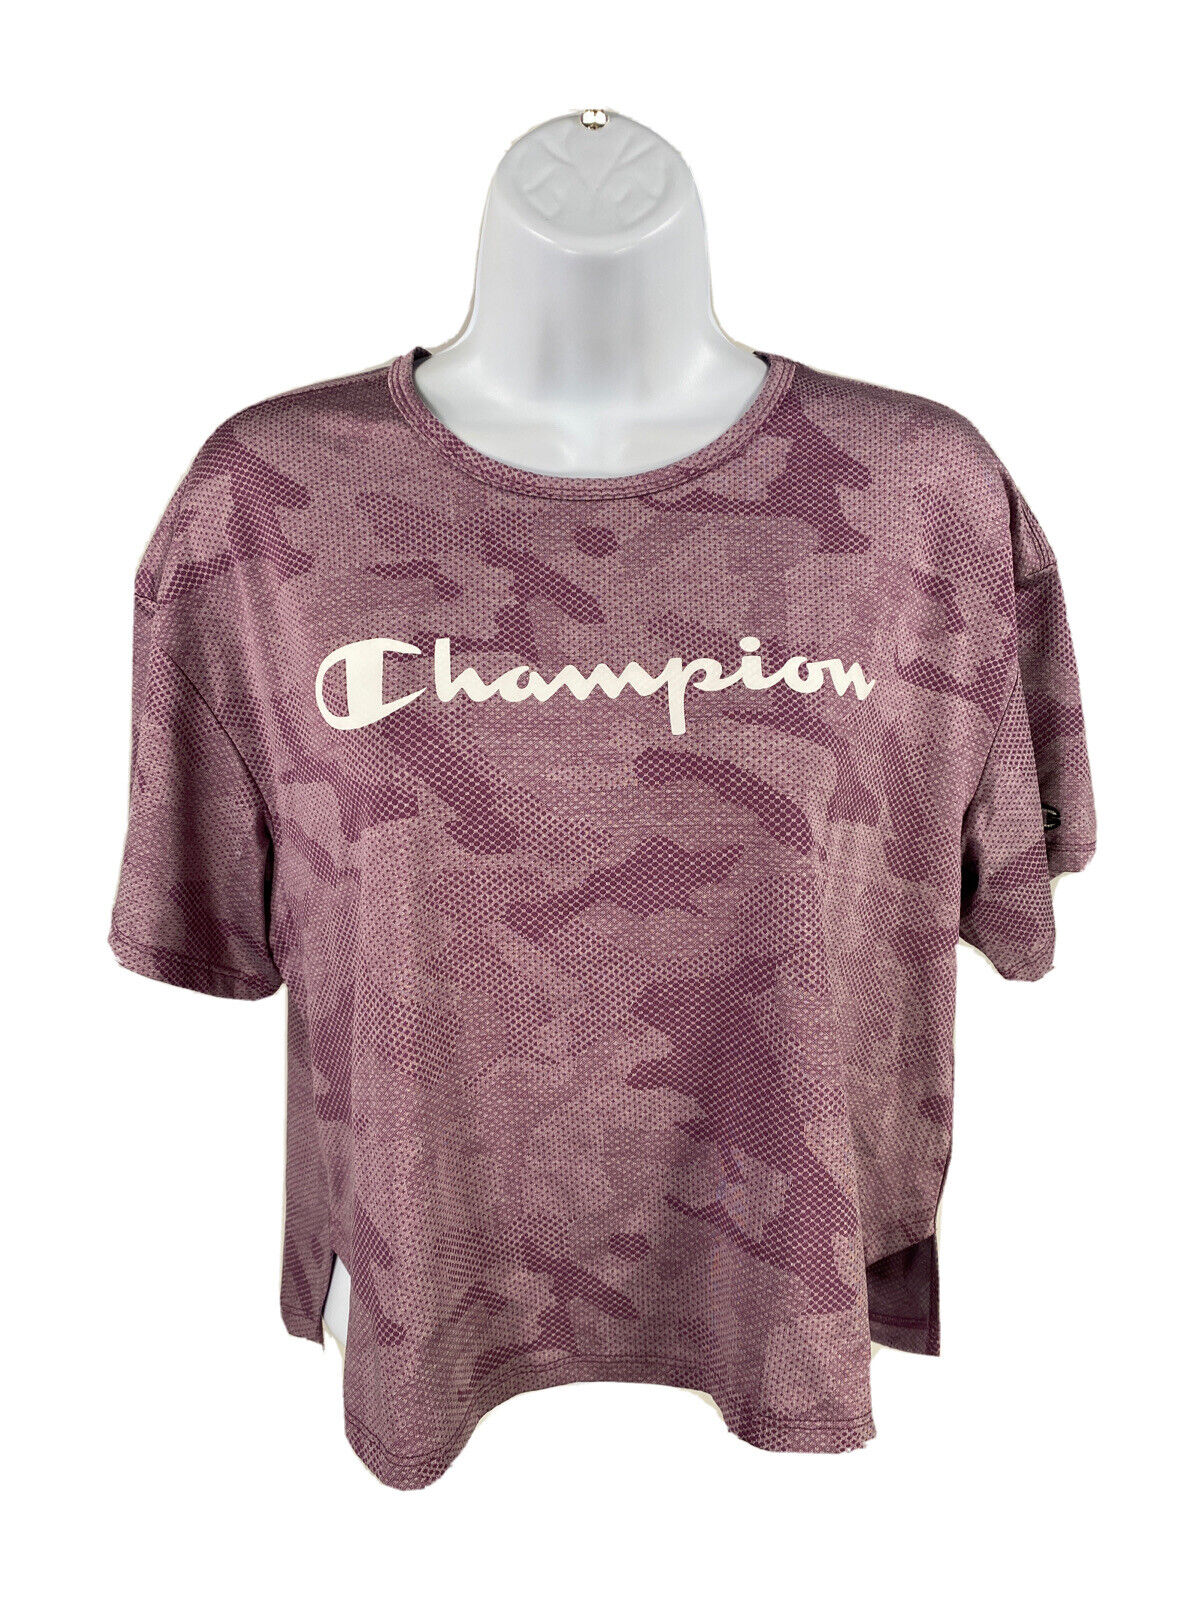 NEW Champion Women's Purple Short Sleeve Loose Fit Cropped Shirt Sz M